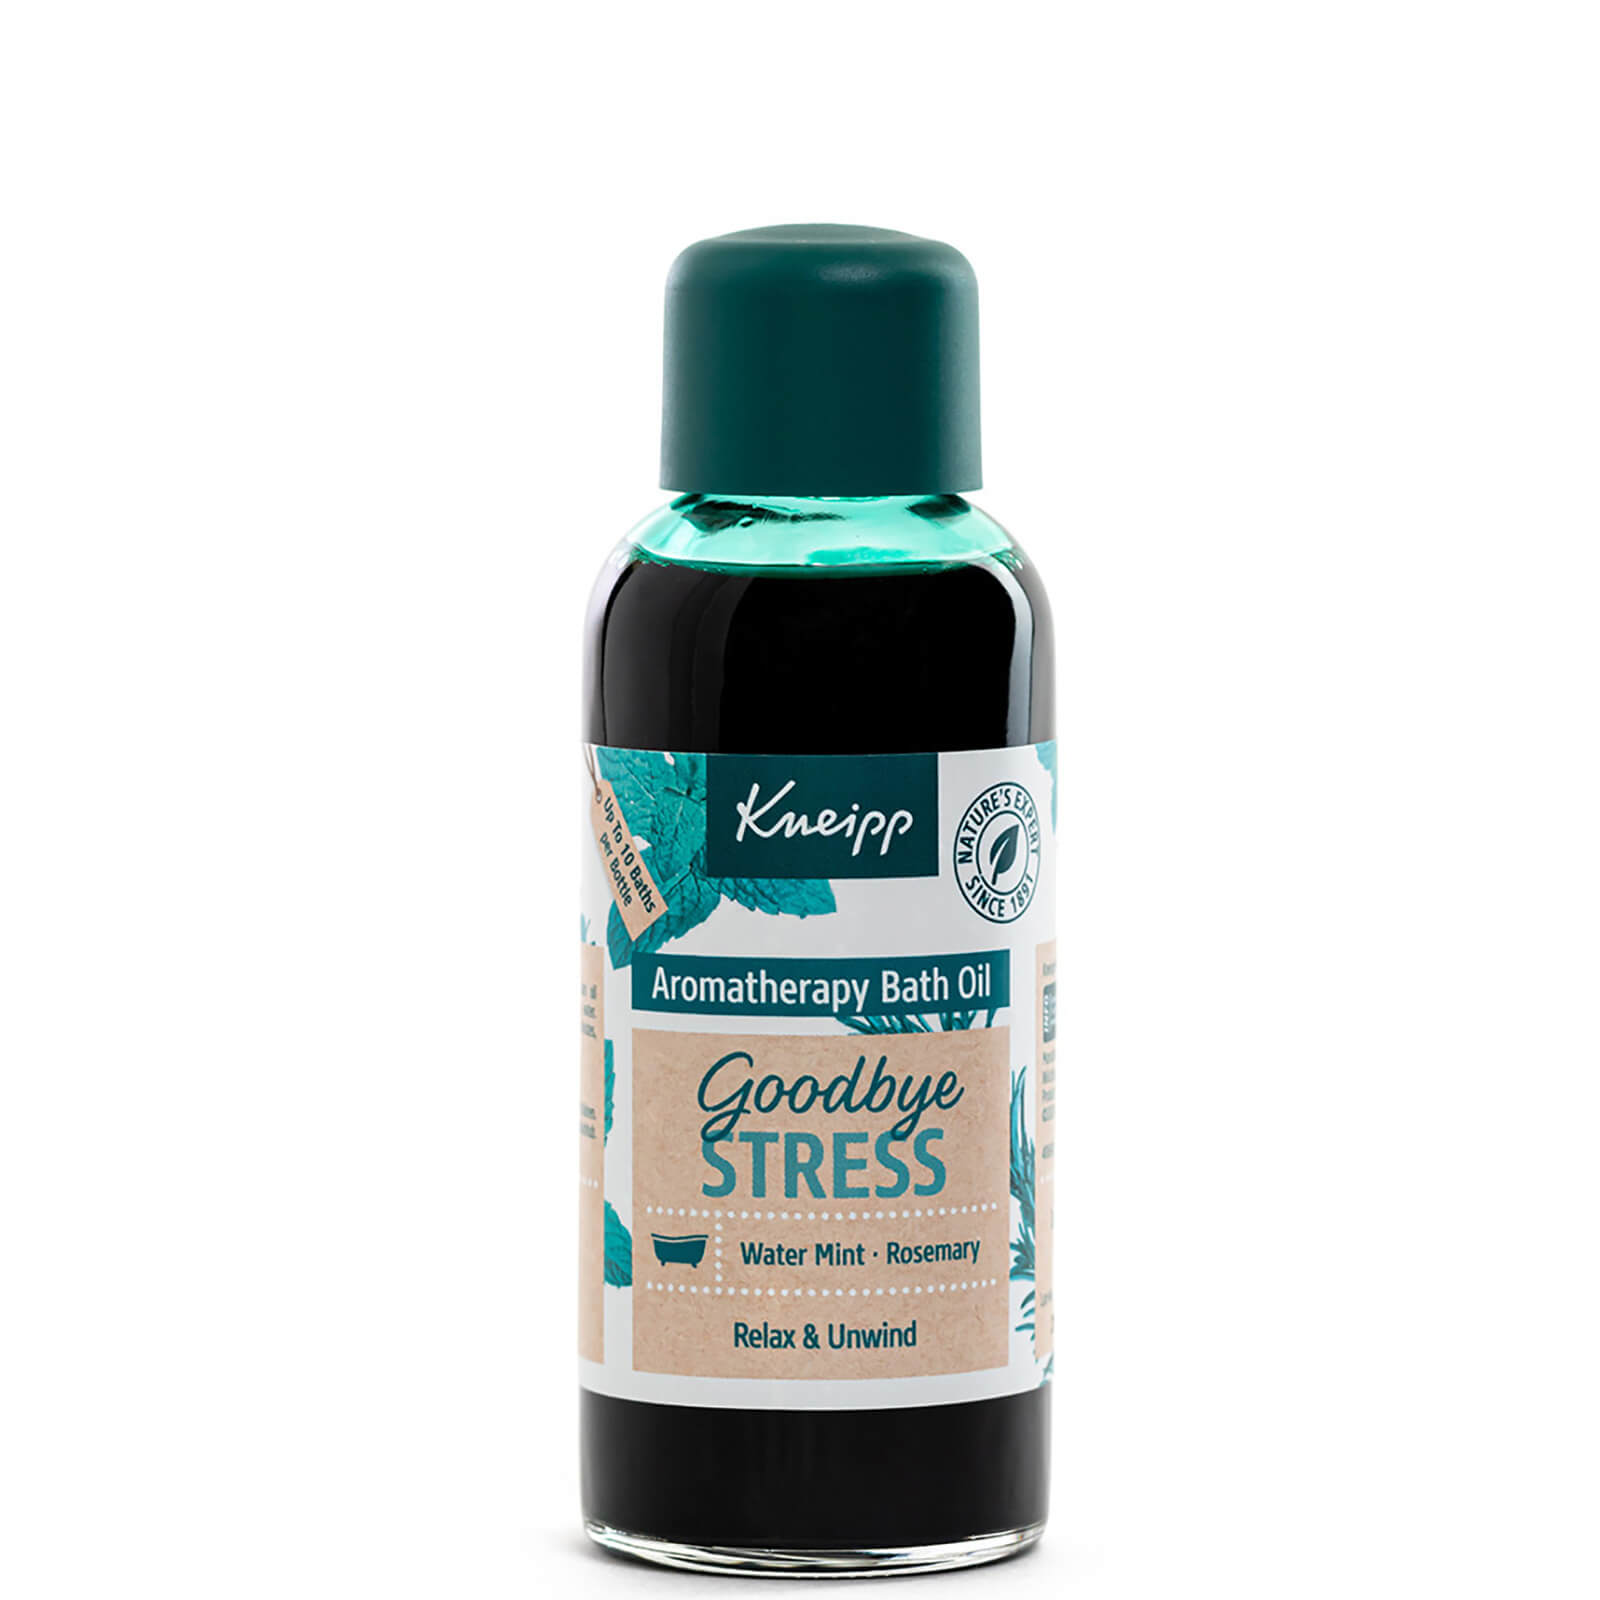 Kneipp Goodbye Stress Bath Oil 3.38 Fl. oz